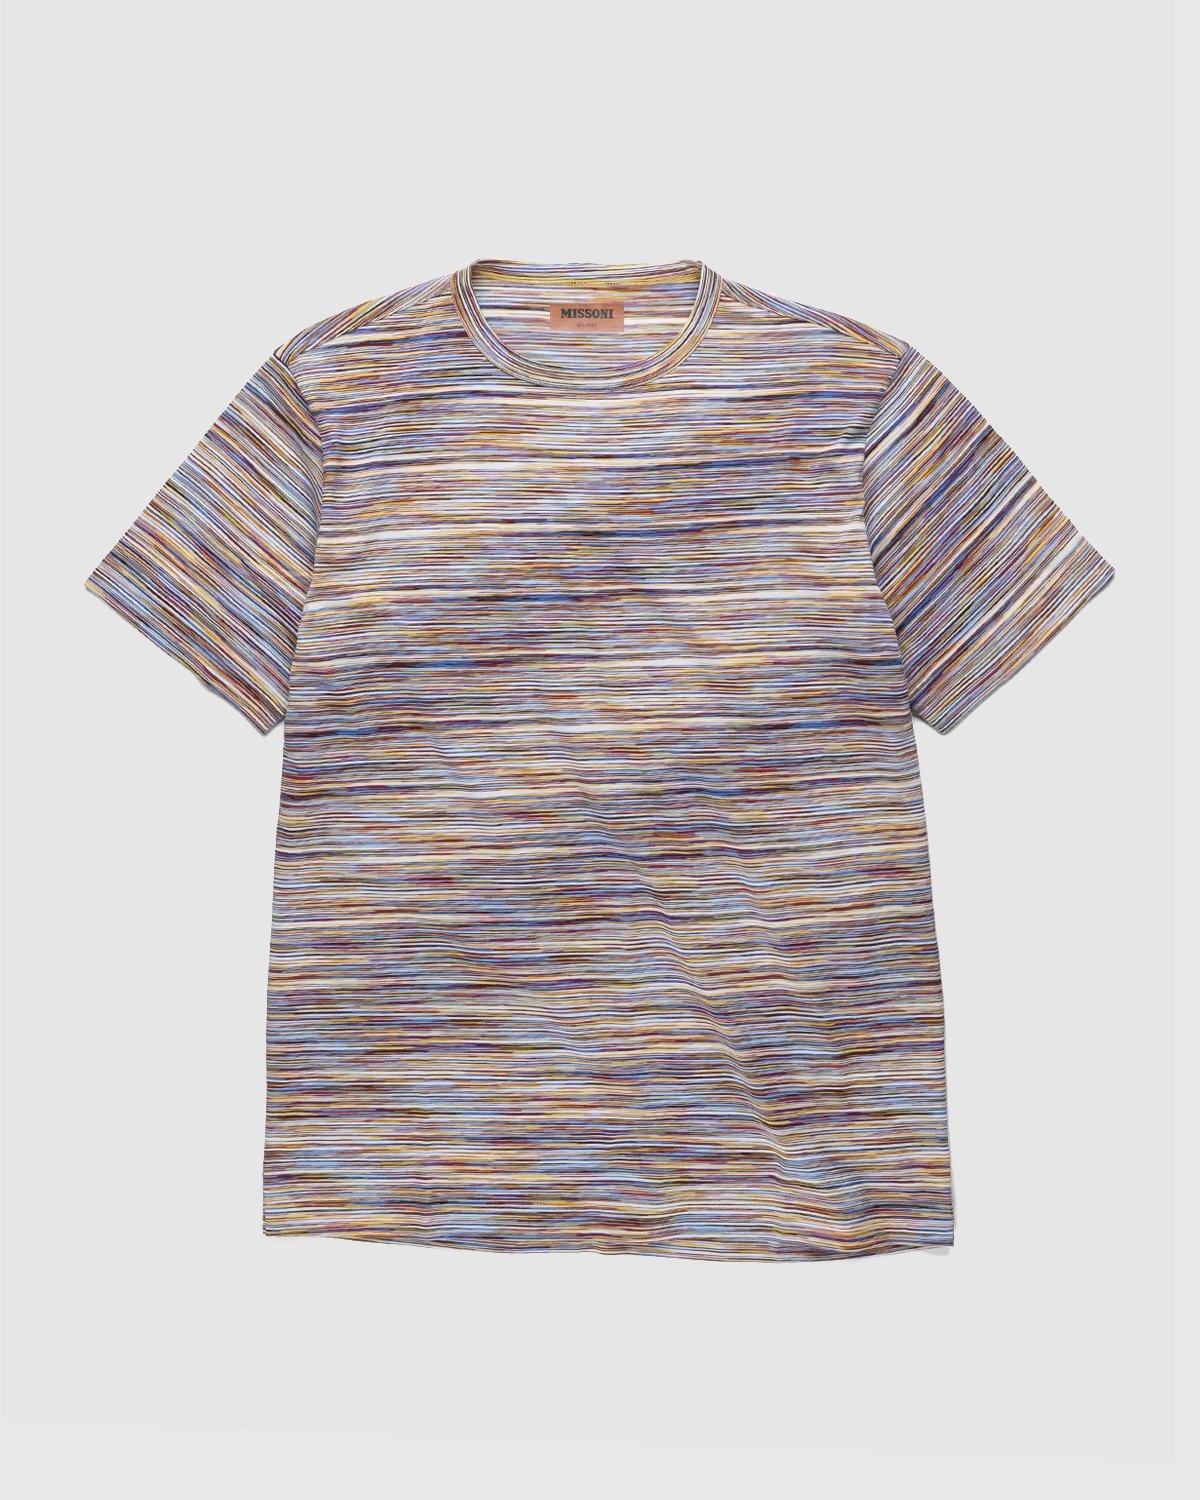 Missoni – Pattern Short-Sleeve T-Shirt Flammato - Tops - Multi - Image 1